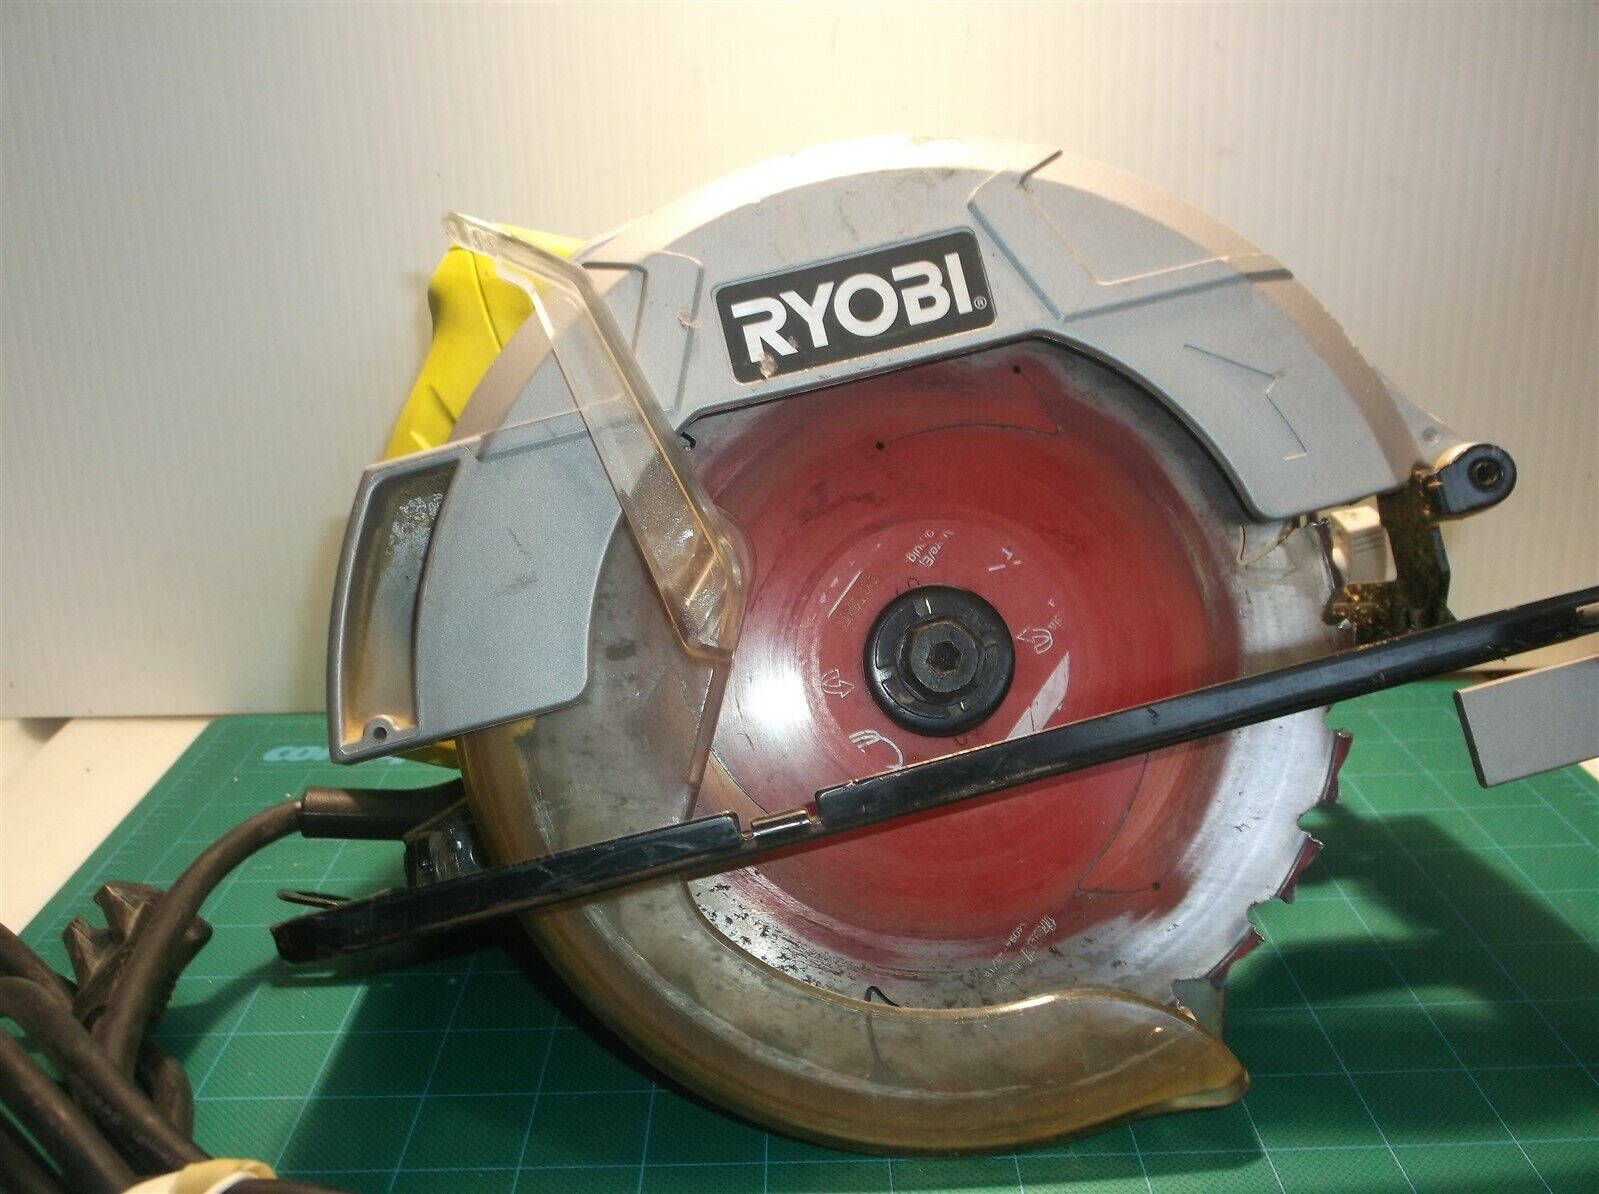 Ryobi CSB125 1/4 in Corded Circular Saw 13 Amp sn cs17172d619193 eBay